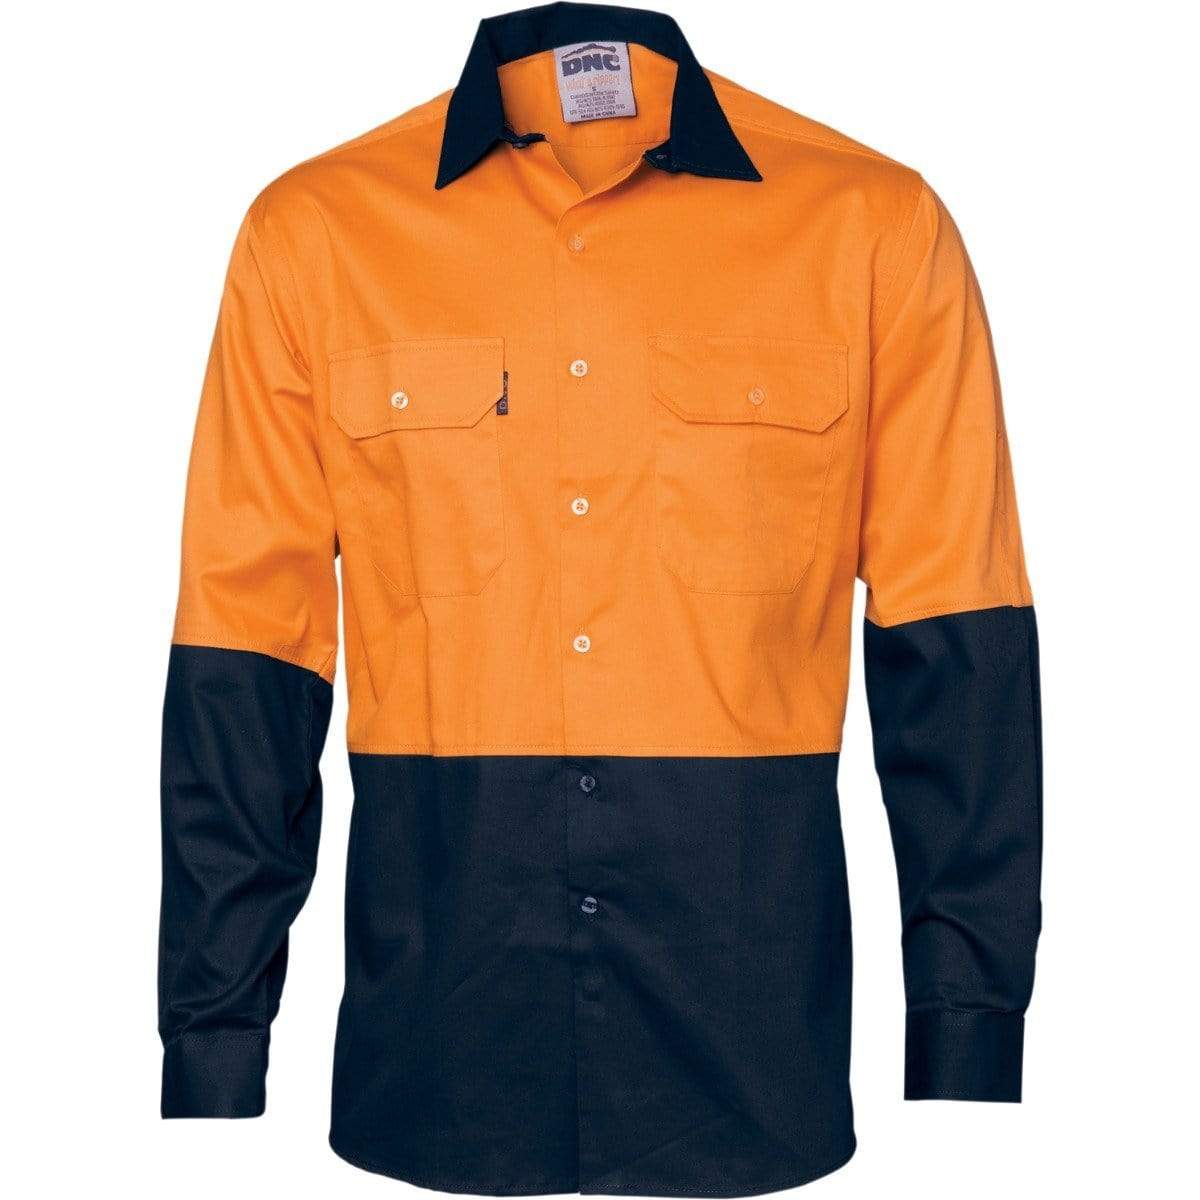 Dnc Workwear Hi-vis Cool-breeze Vertical Vented Long Sleeve Cotton Shirt - 3732 Work Wear DNC Workwear Orange/Navy XS 